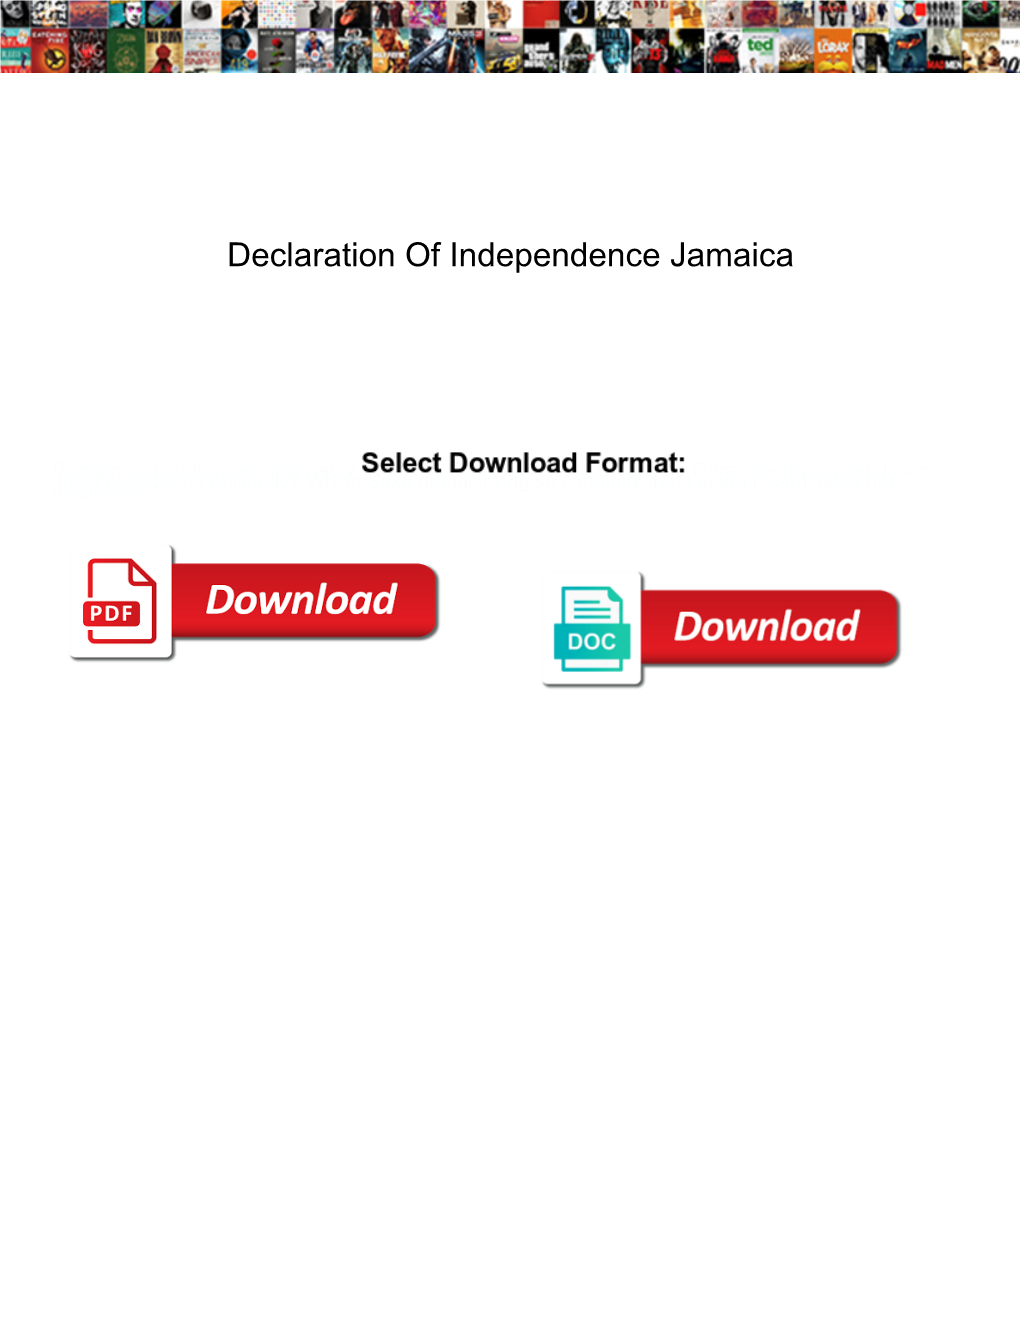 Declaration of Independence Jamaica